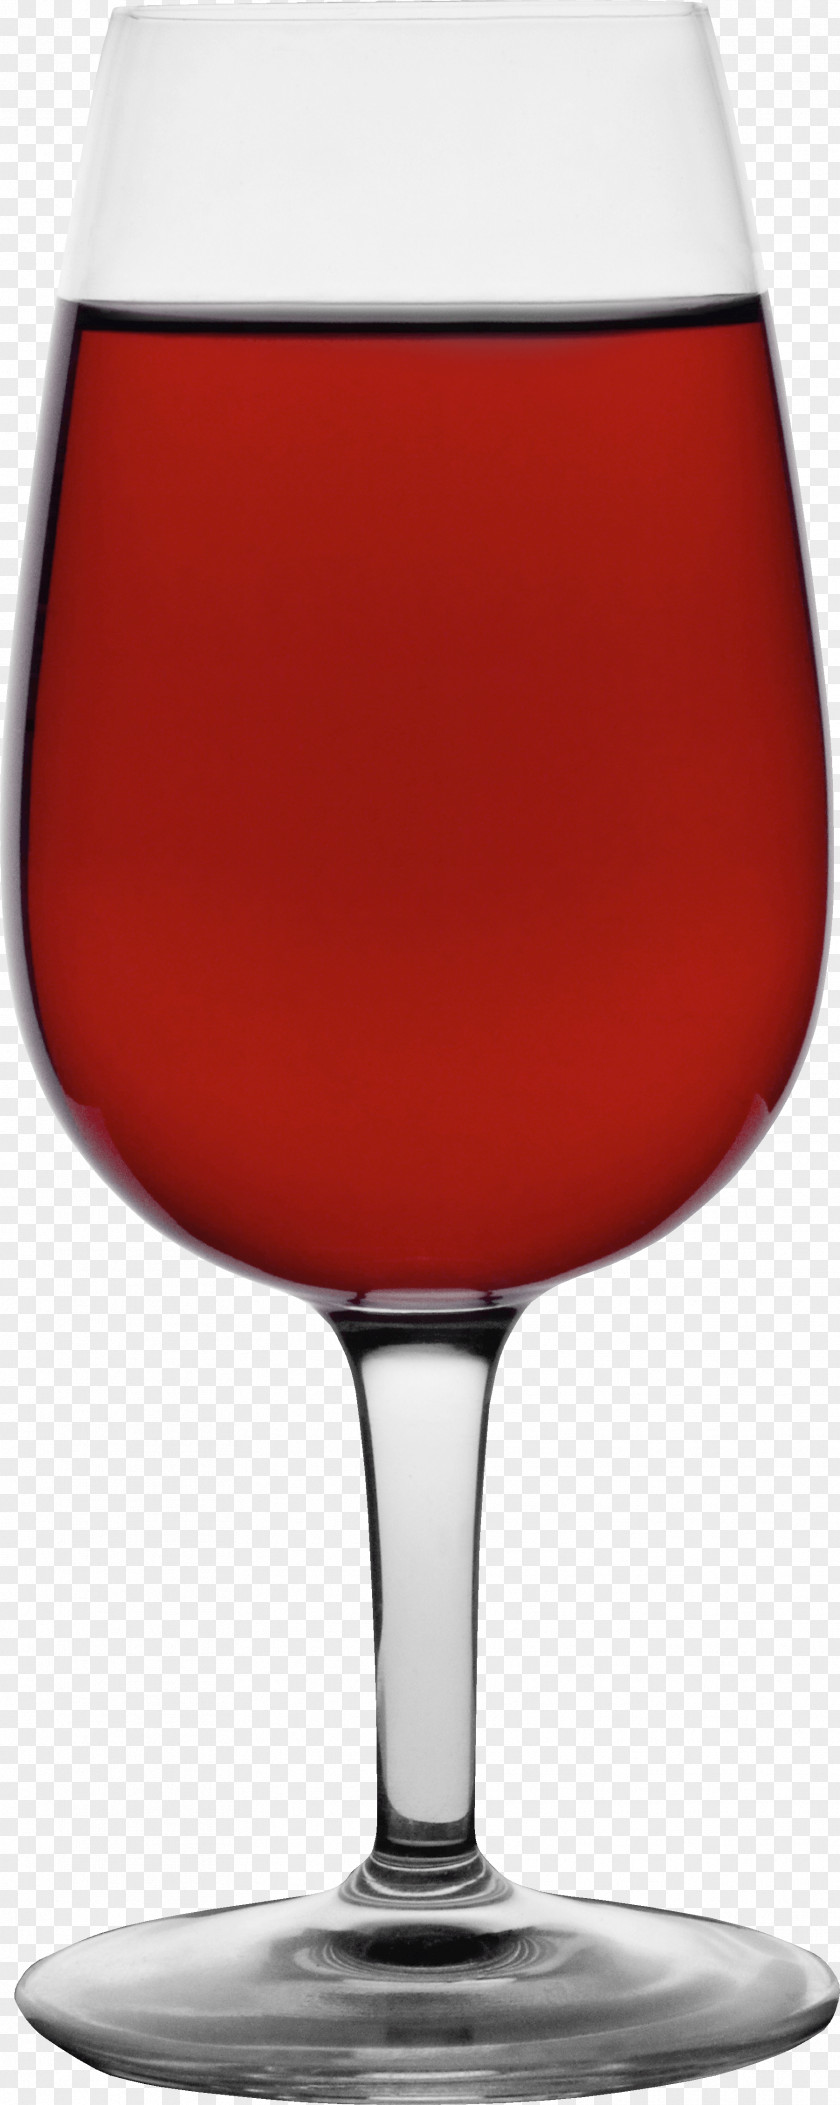 Glass Image Beer Glassware Wine Alcoholic Beverage PNG